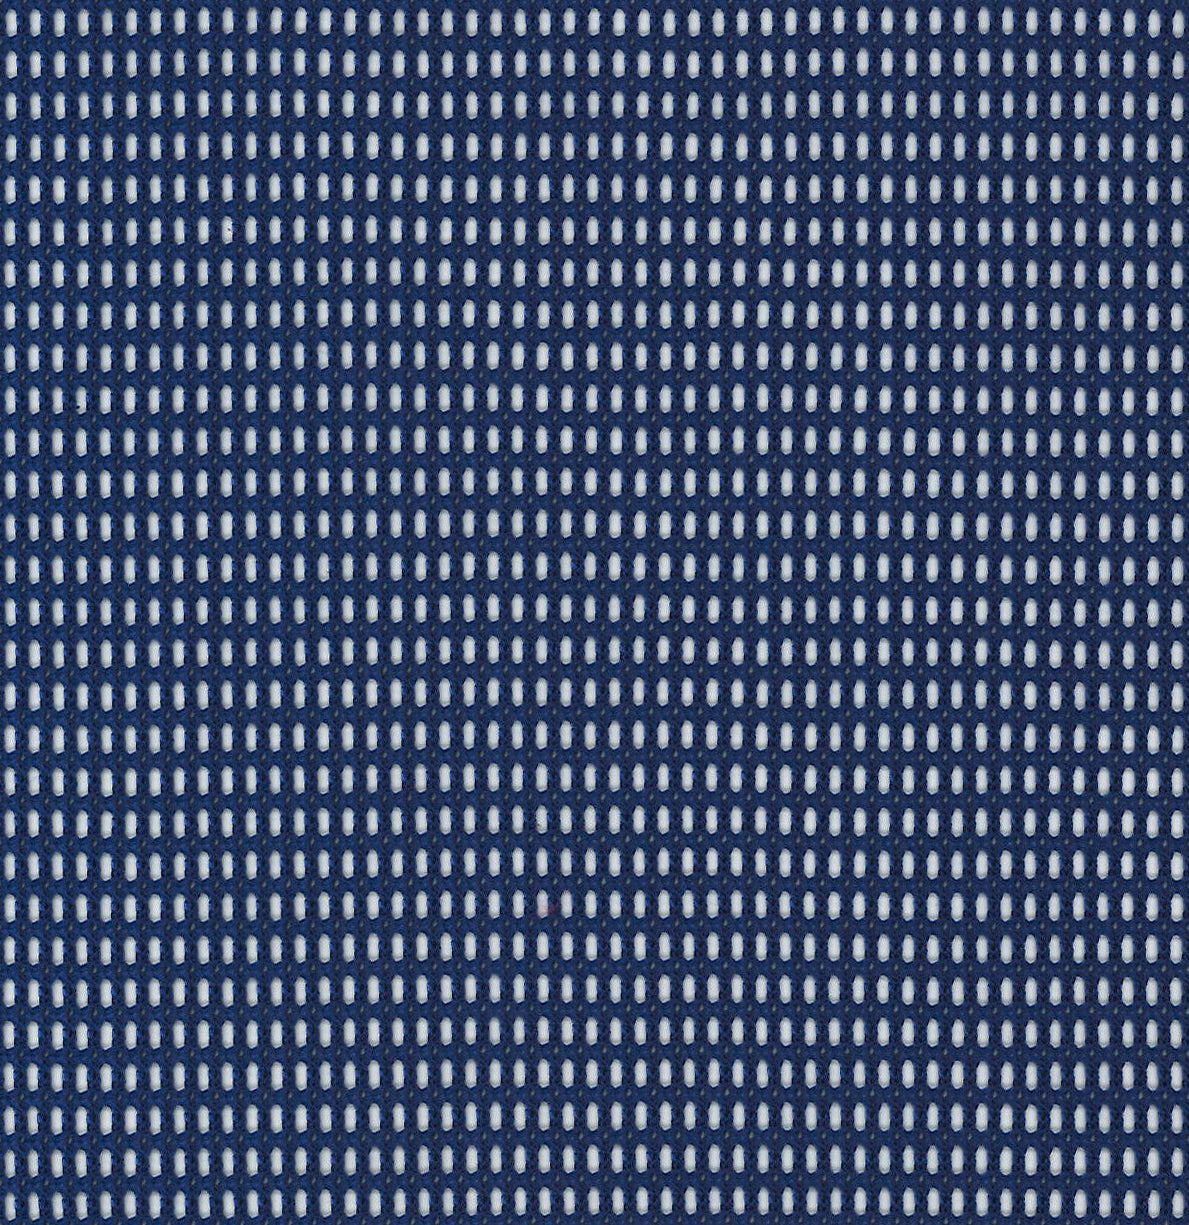 13013-06 Navy Polyester Mesh Plain Dyed 100% blue knit mesh plain dyed polyester Mesh, Soild Color - knit fabric - woven fabric - fabric company - fabric wholesale - fabric b2b - fabric factory - high quality fabric - hong kong fabric - fabric hk - acetate fabric - cotton fabric - linen fabric - metallic fabric - nylon fabric - polyester fabric - spandex fabric - chun wing hing - cwh hk - fabric worldwide ship - 針織布 - 梳織布 - 布料公司- 布料批發 - 香港布料 - 秦榮興